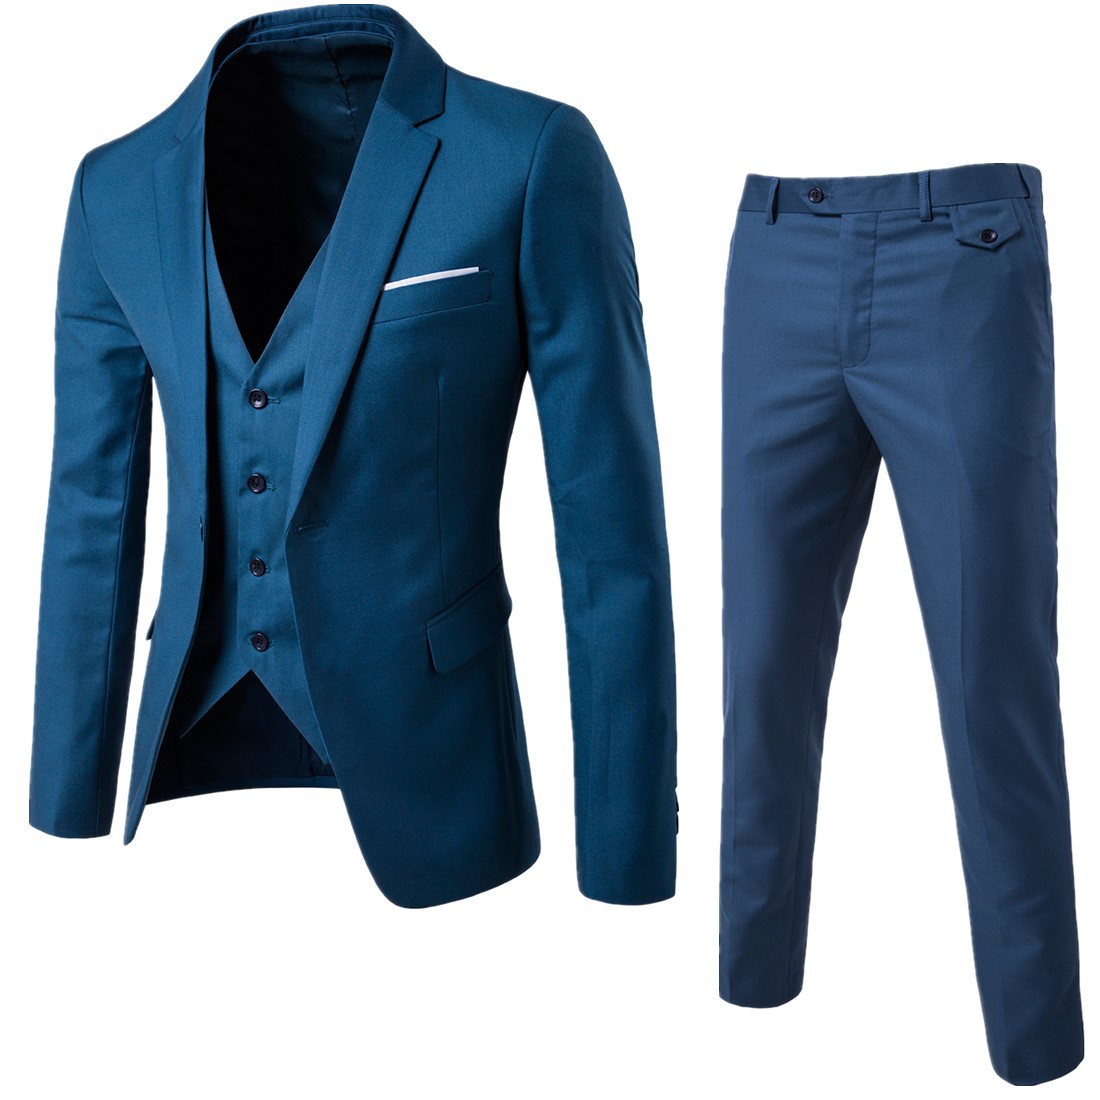 2020 British Gentleman three-piece slim suit for men